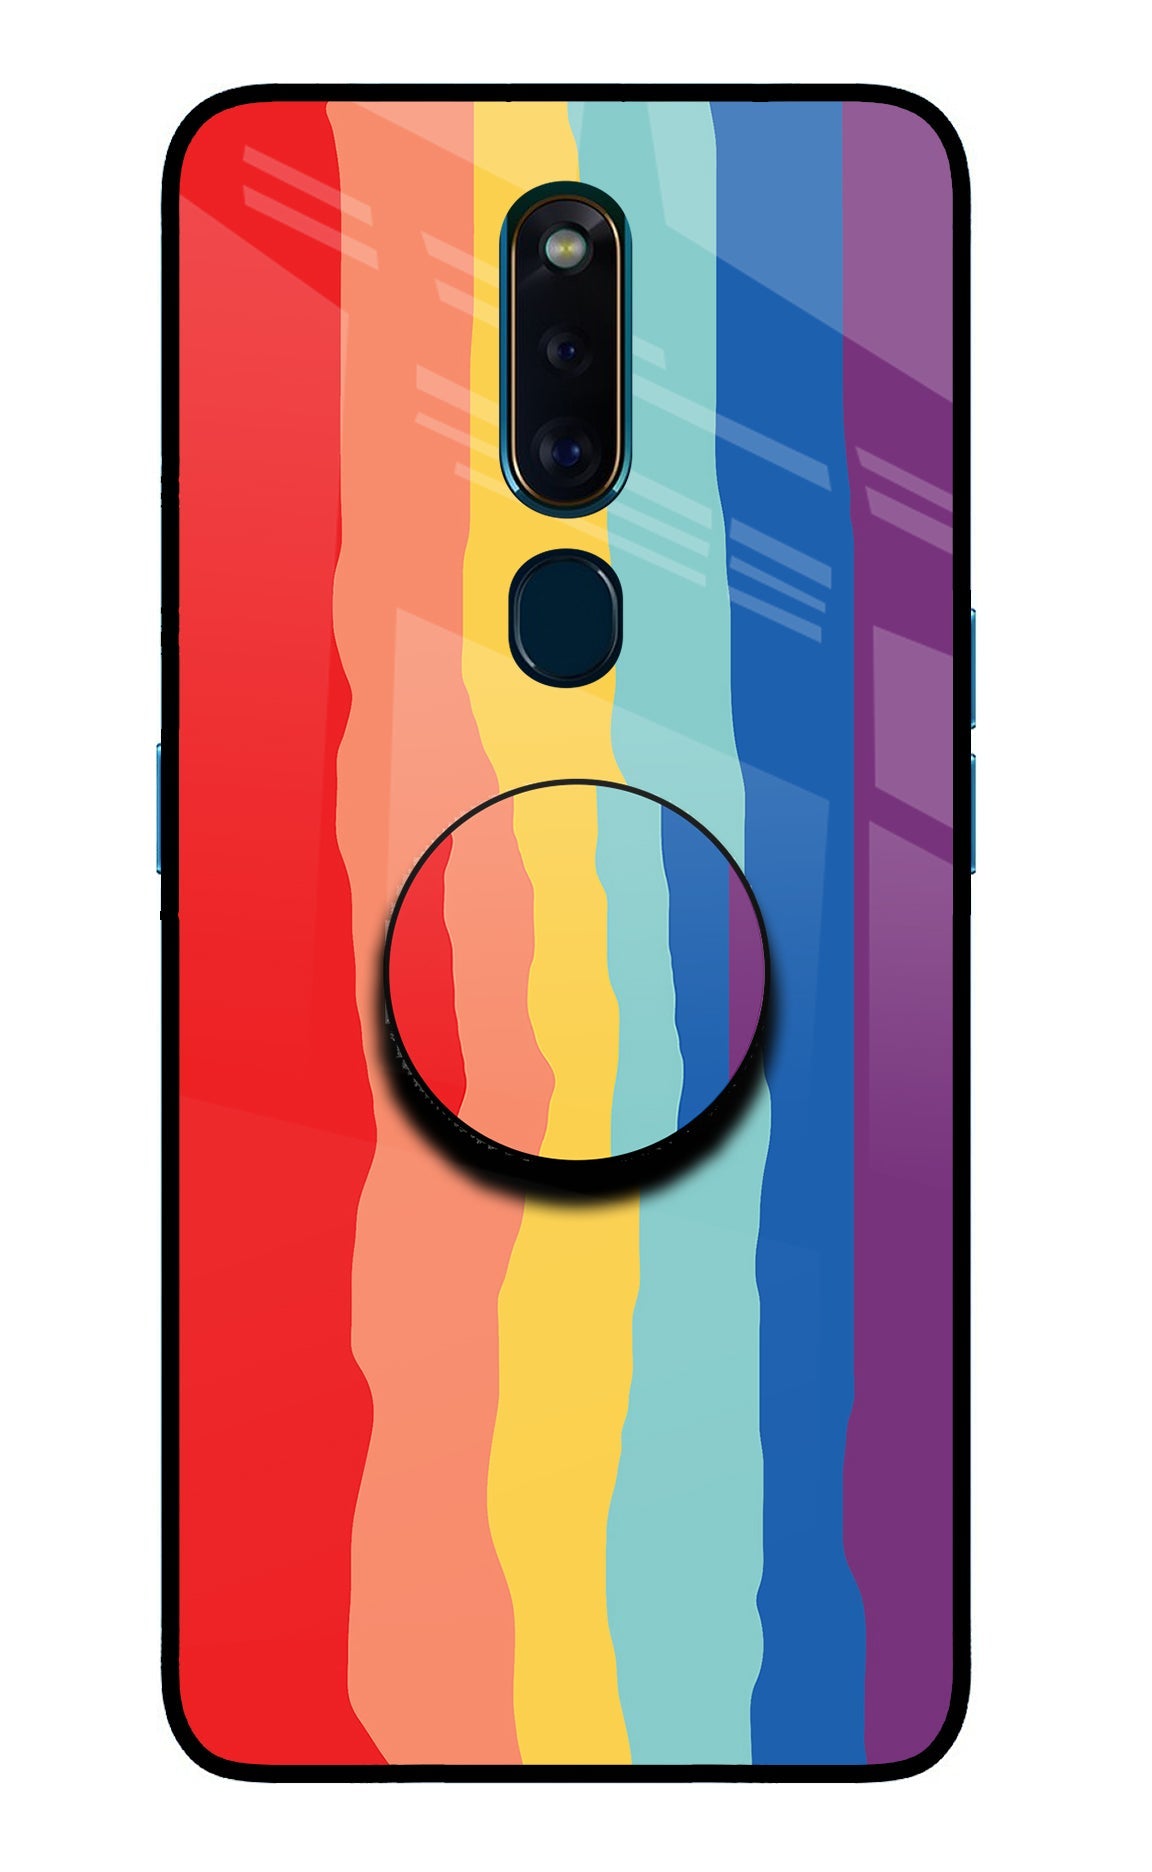 Rainbow Oppo F11 Pro Glass Case